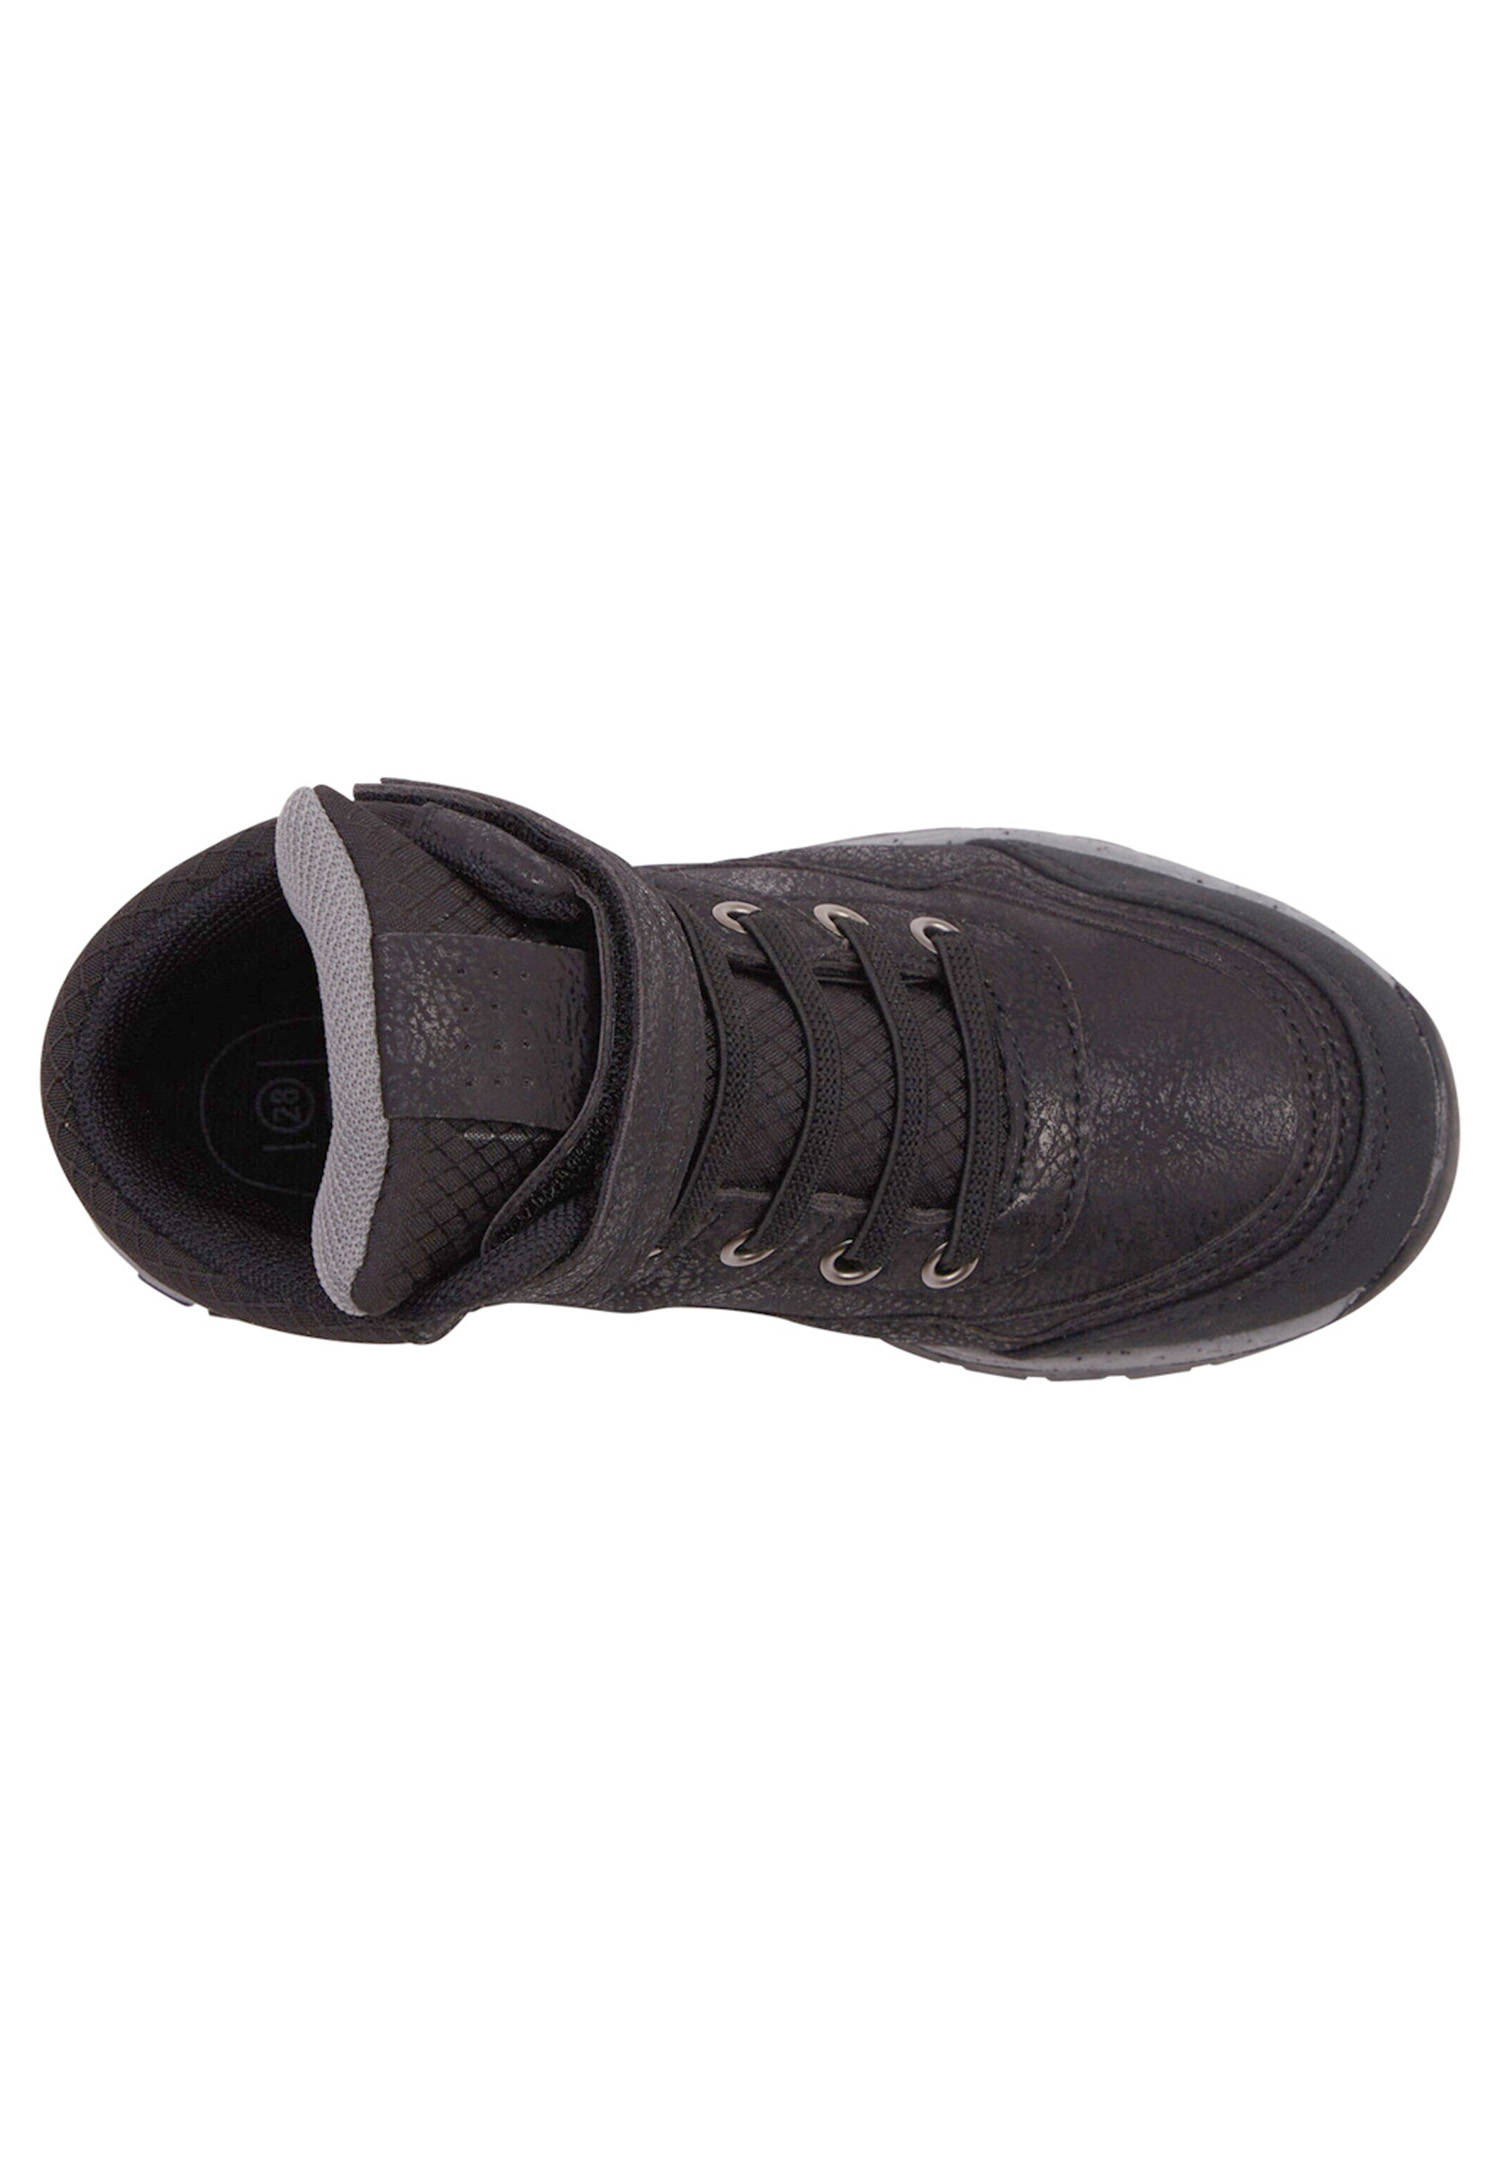 Kappa Unisex Kinder Sneaker High Top Stylecode 260732K 1116 schwarz